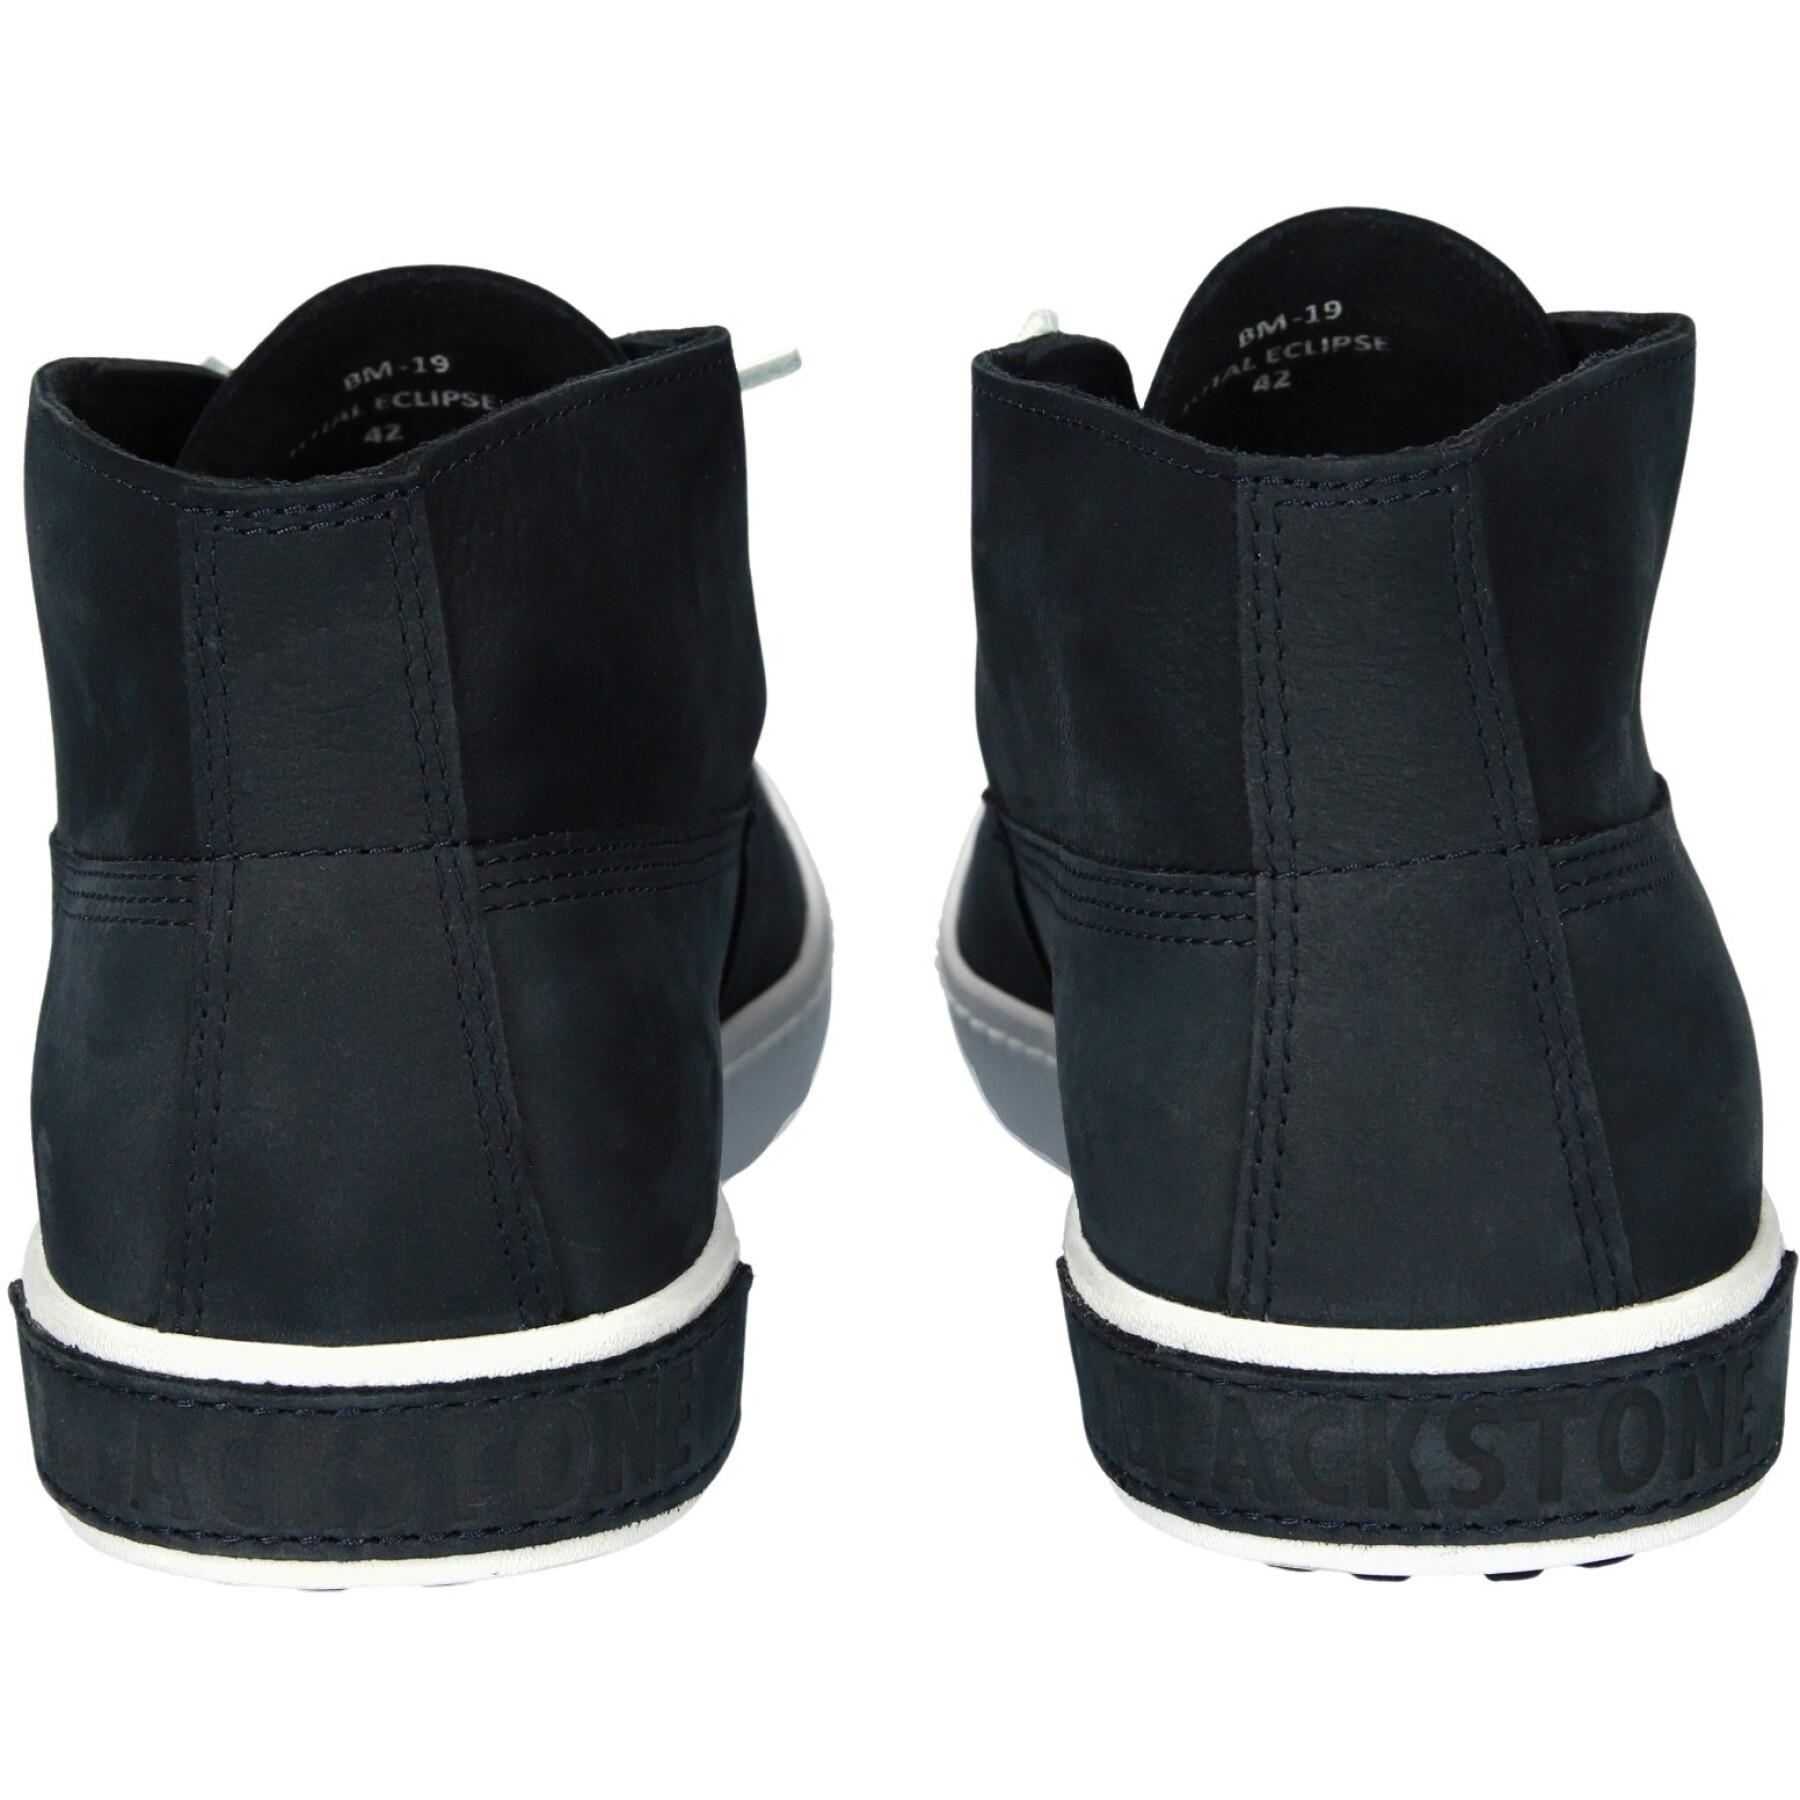 Sneakers Blackstone BM19